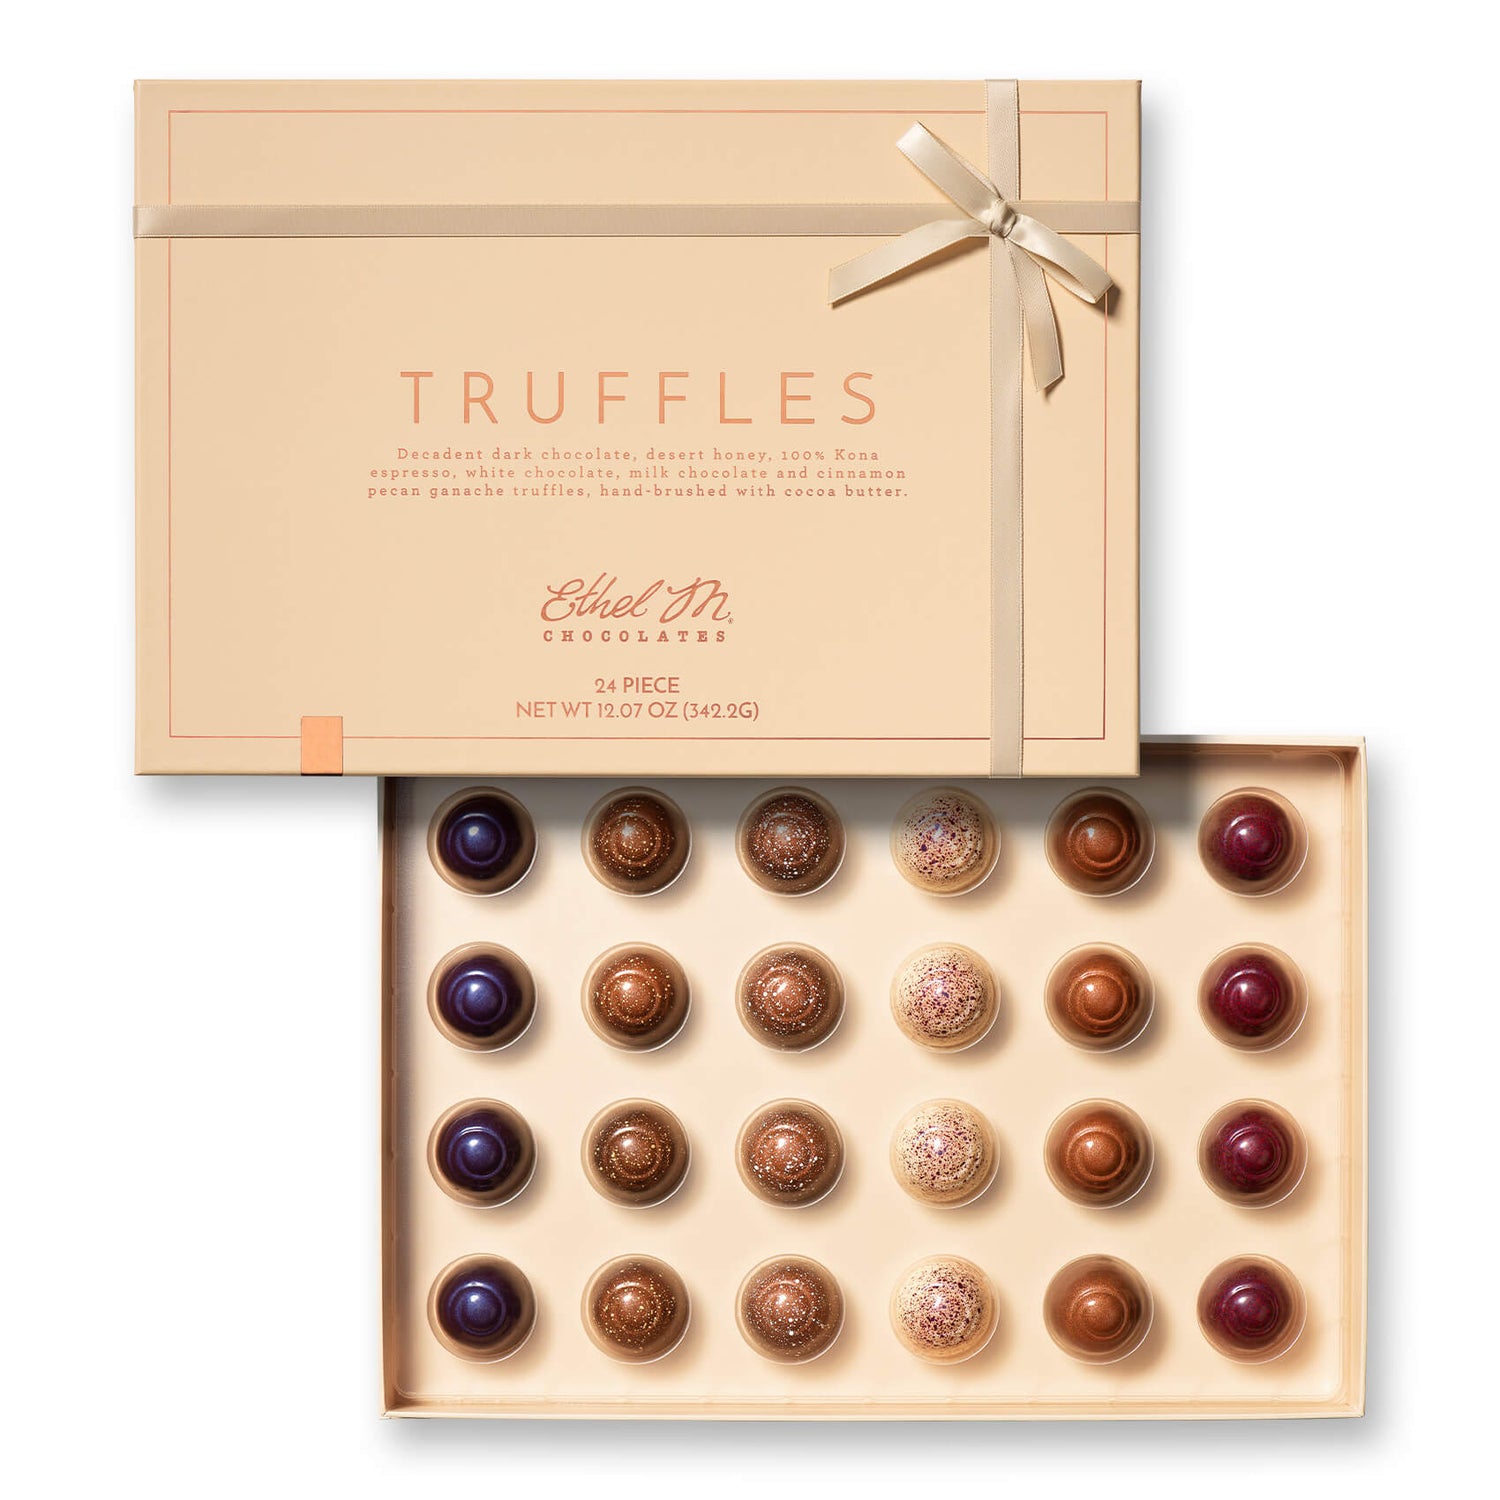 Ethel M Chocolates 24-piece Truffles Collection Hero Image